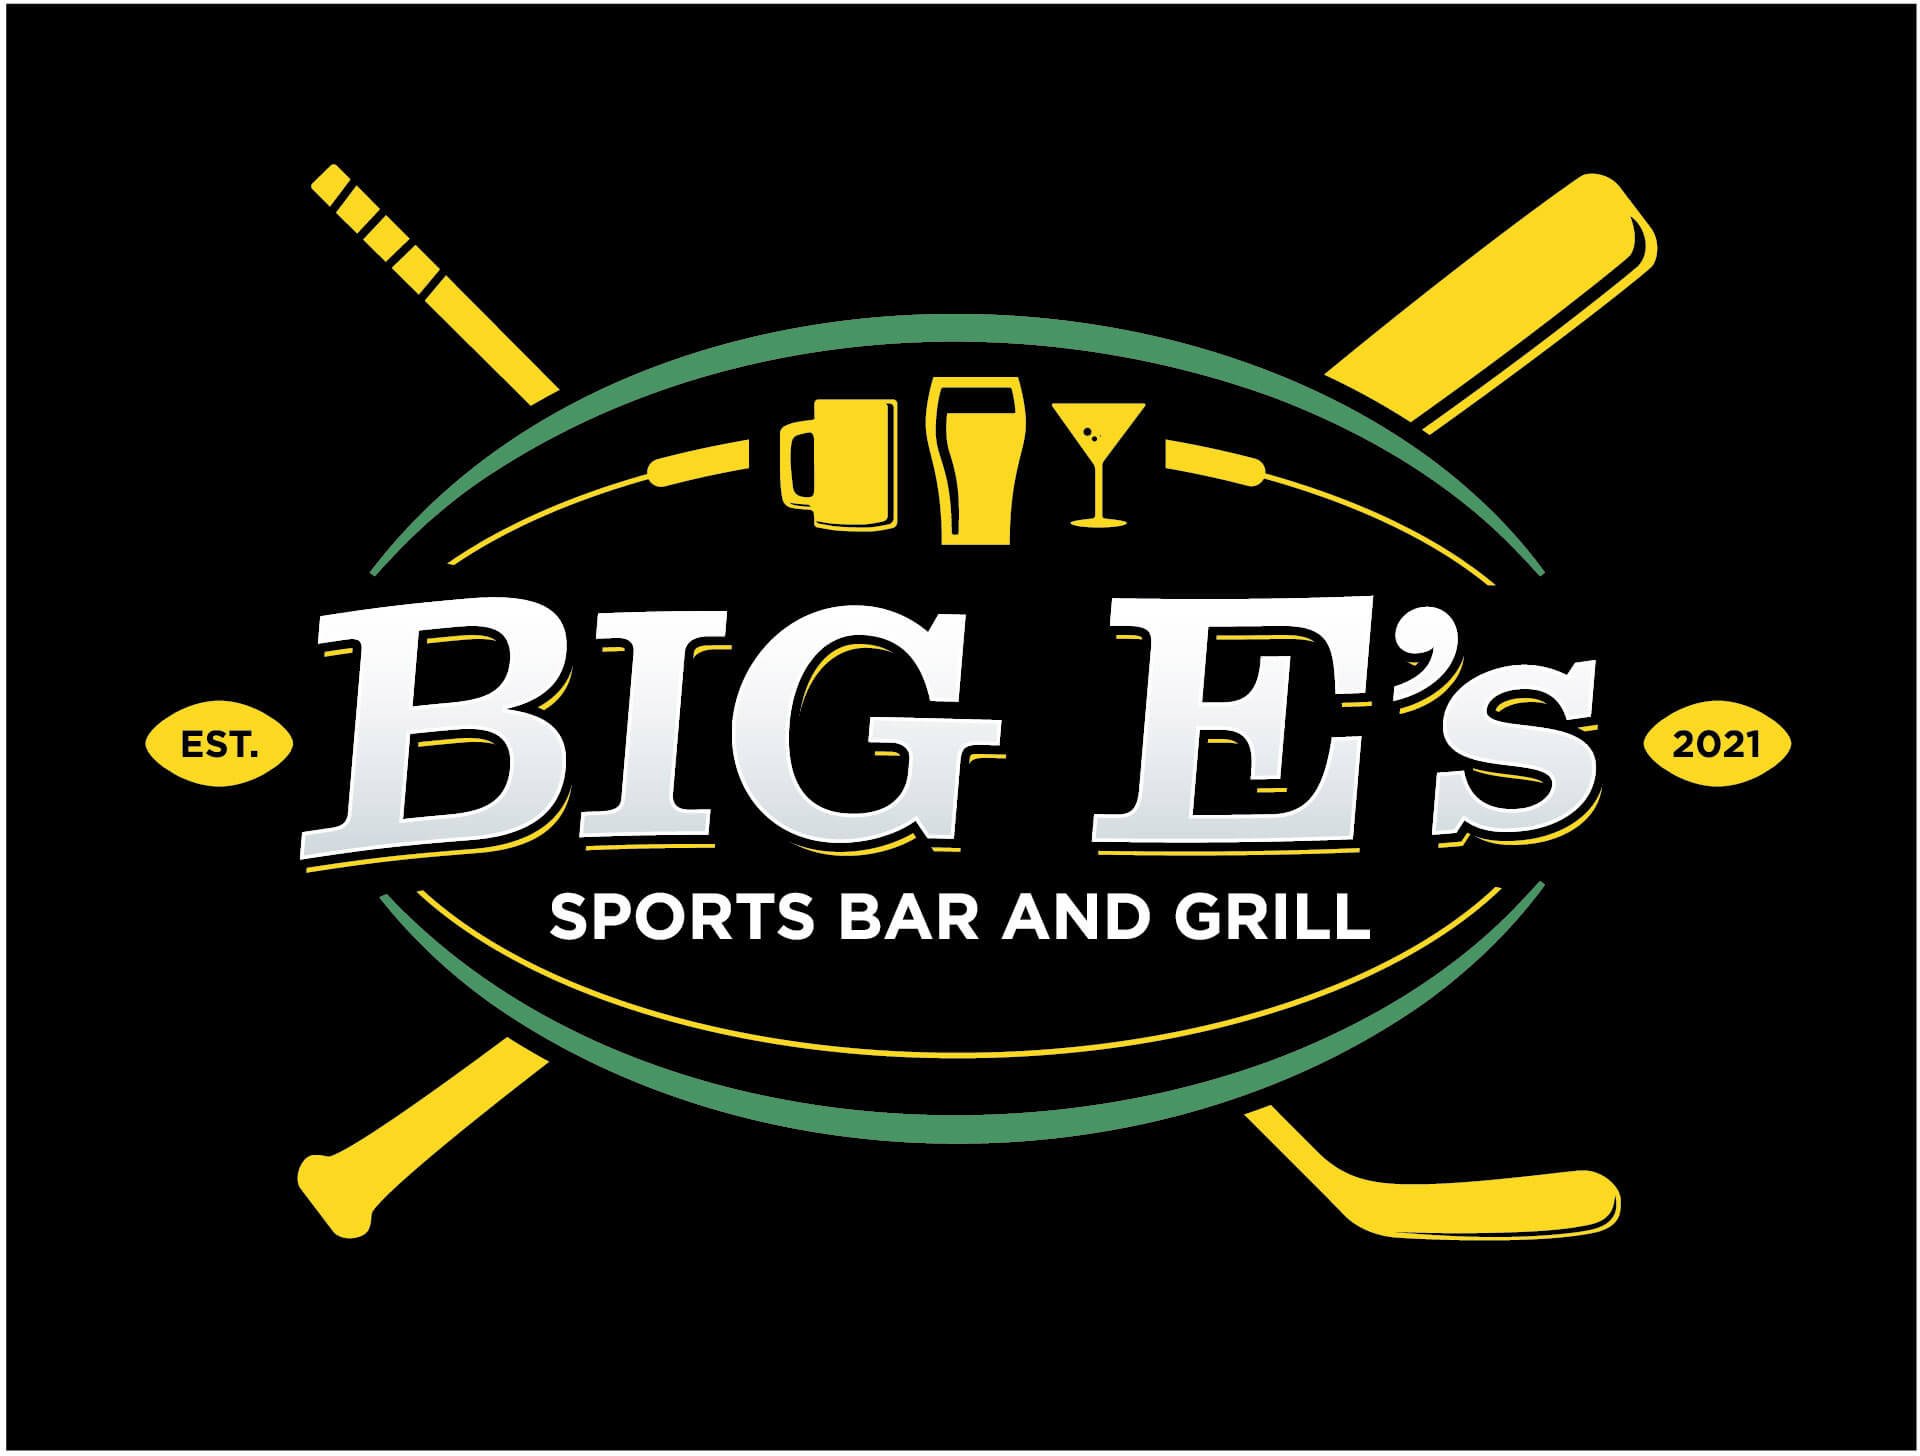 Big leagues Sports Bar - KenteTV